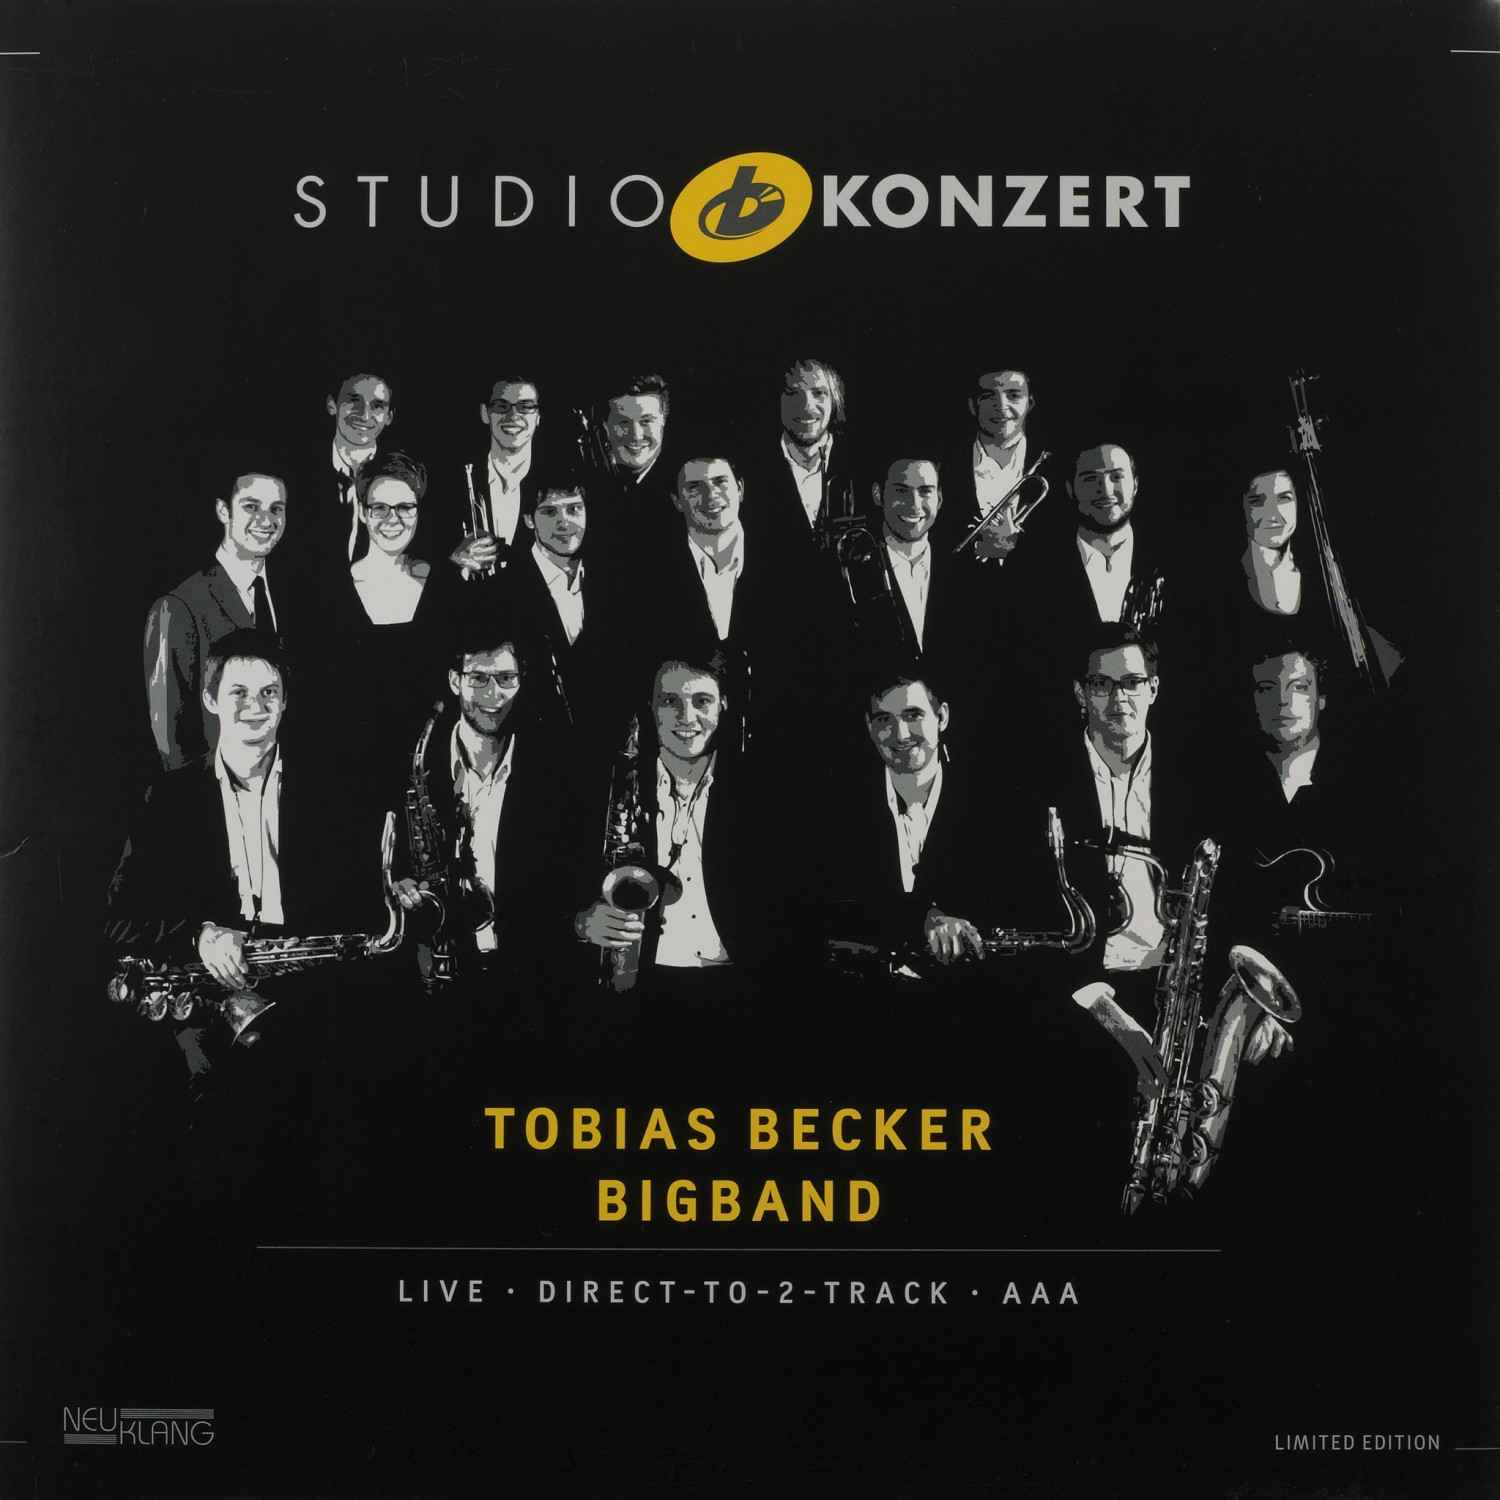 Schallplatte Tobias Becker Bigband - Studio Konzert (Neuklang) im Test, Bild 1